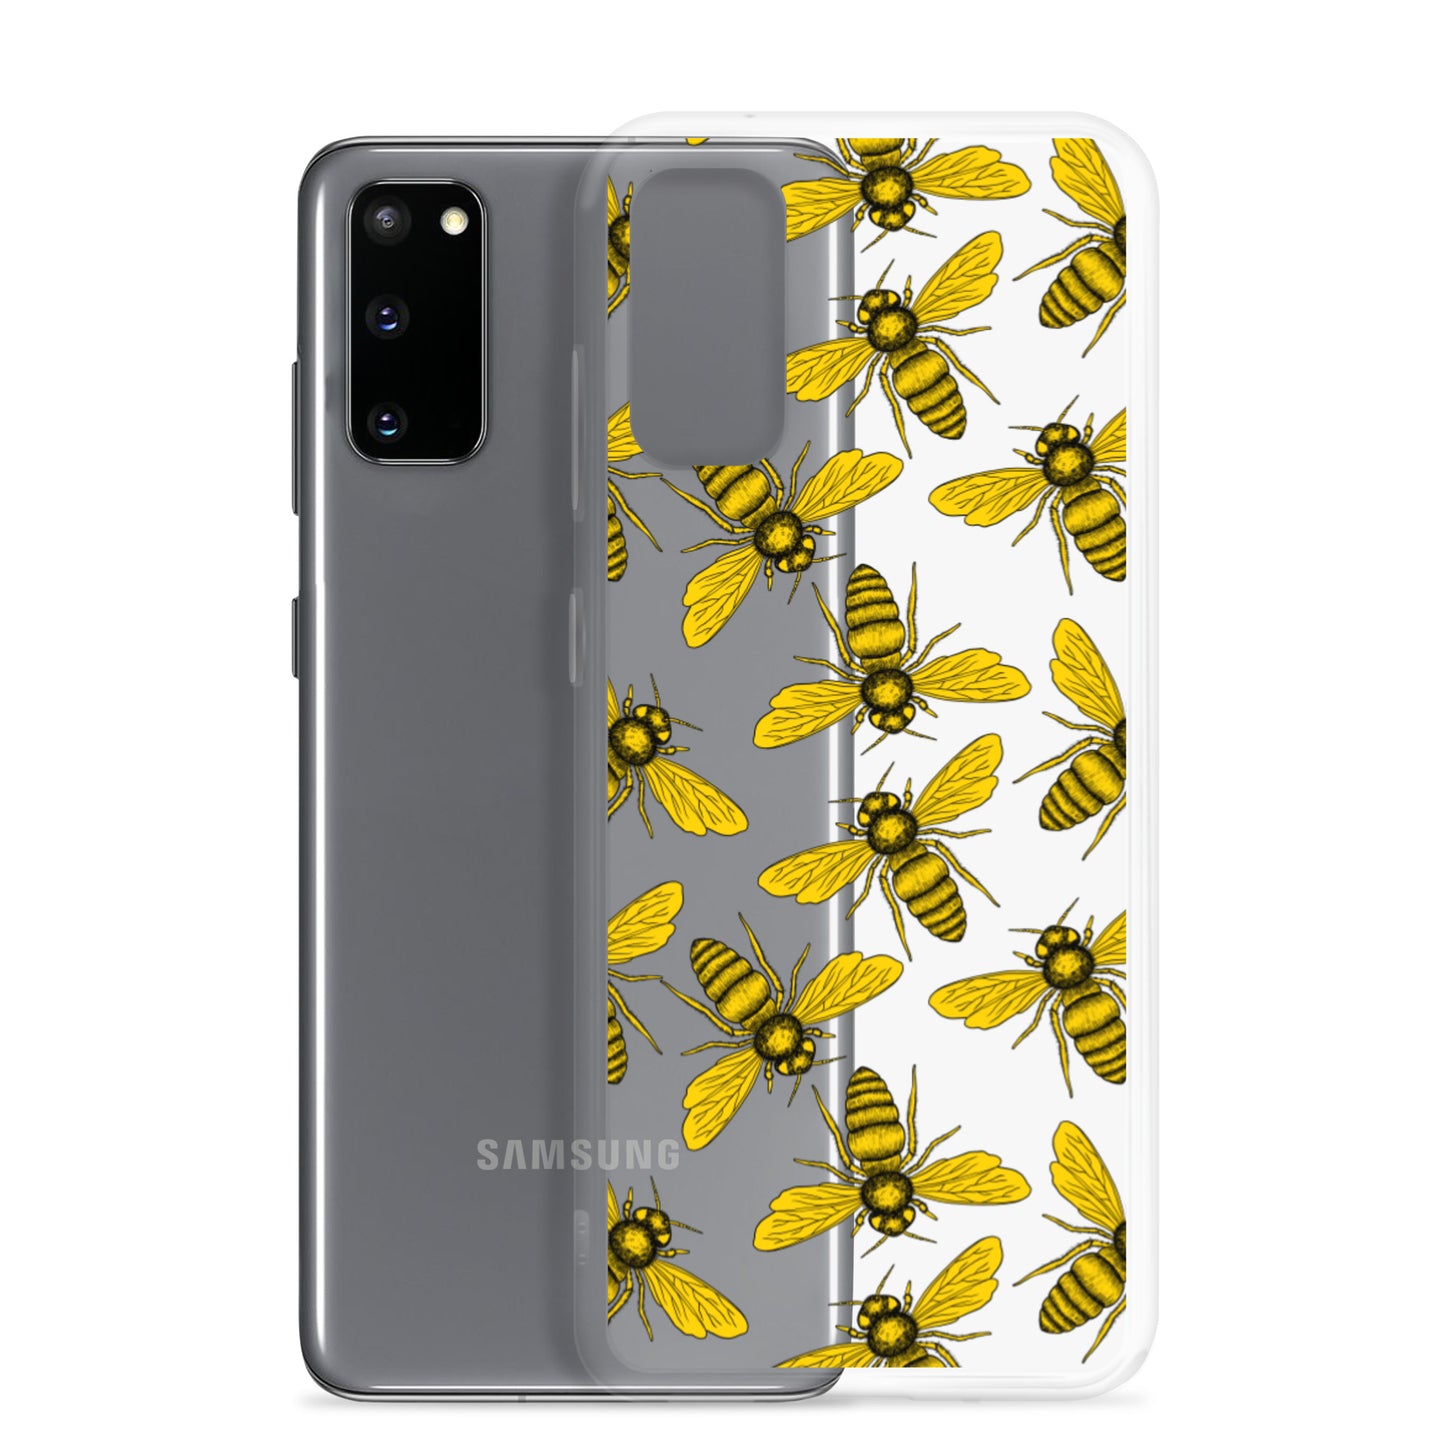 Honey Bees Samsung Galaxy Case